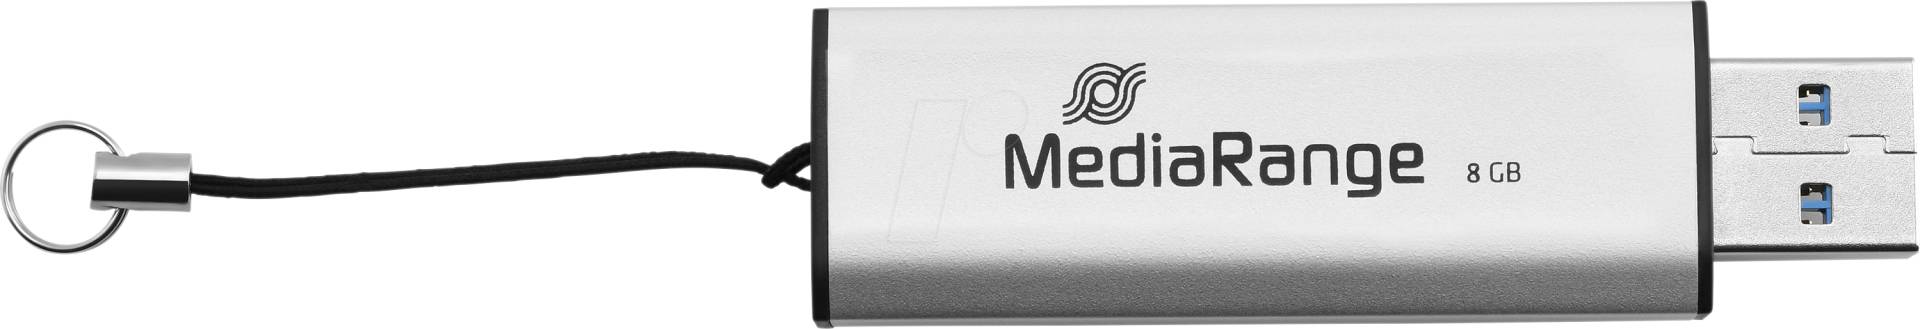 MR 914 - USB-Stick, USB 3.0, 8 GB, Slide von MEDIARANGE